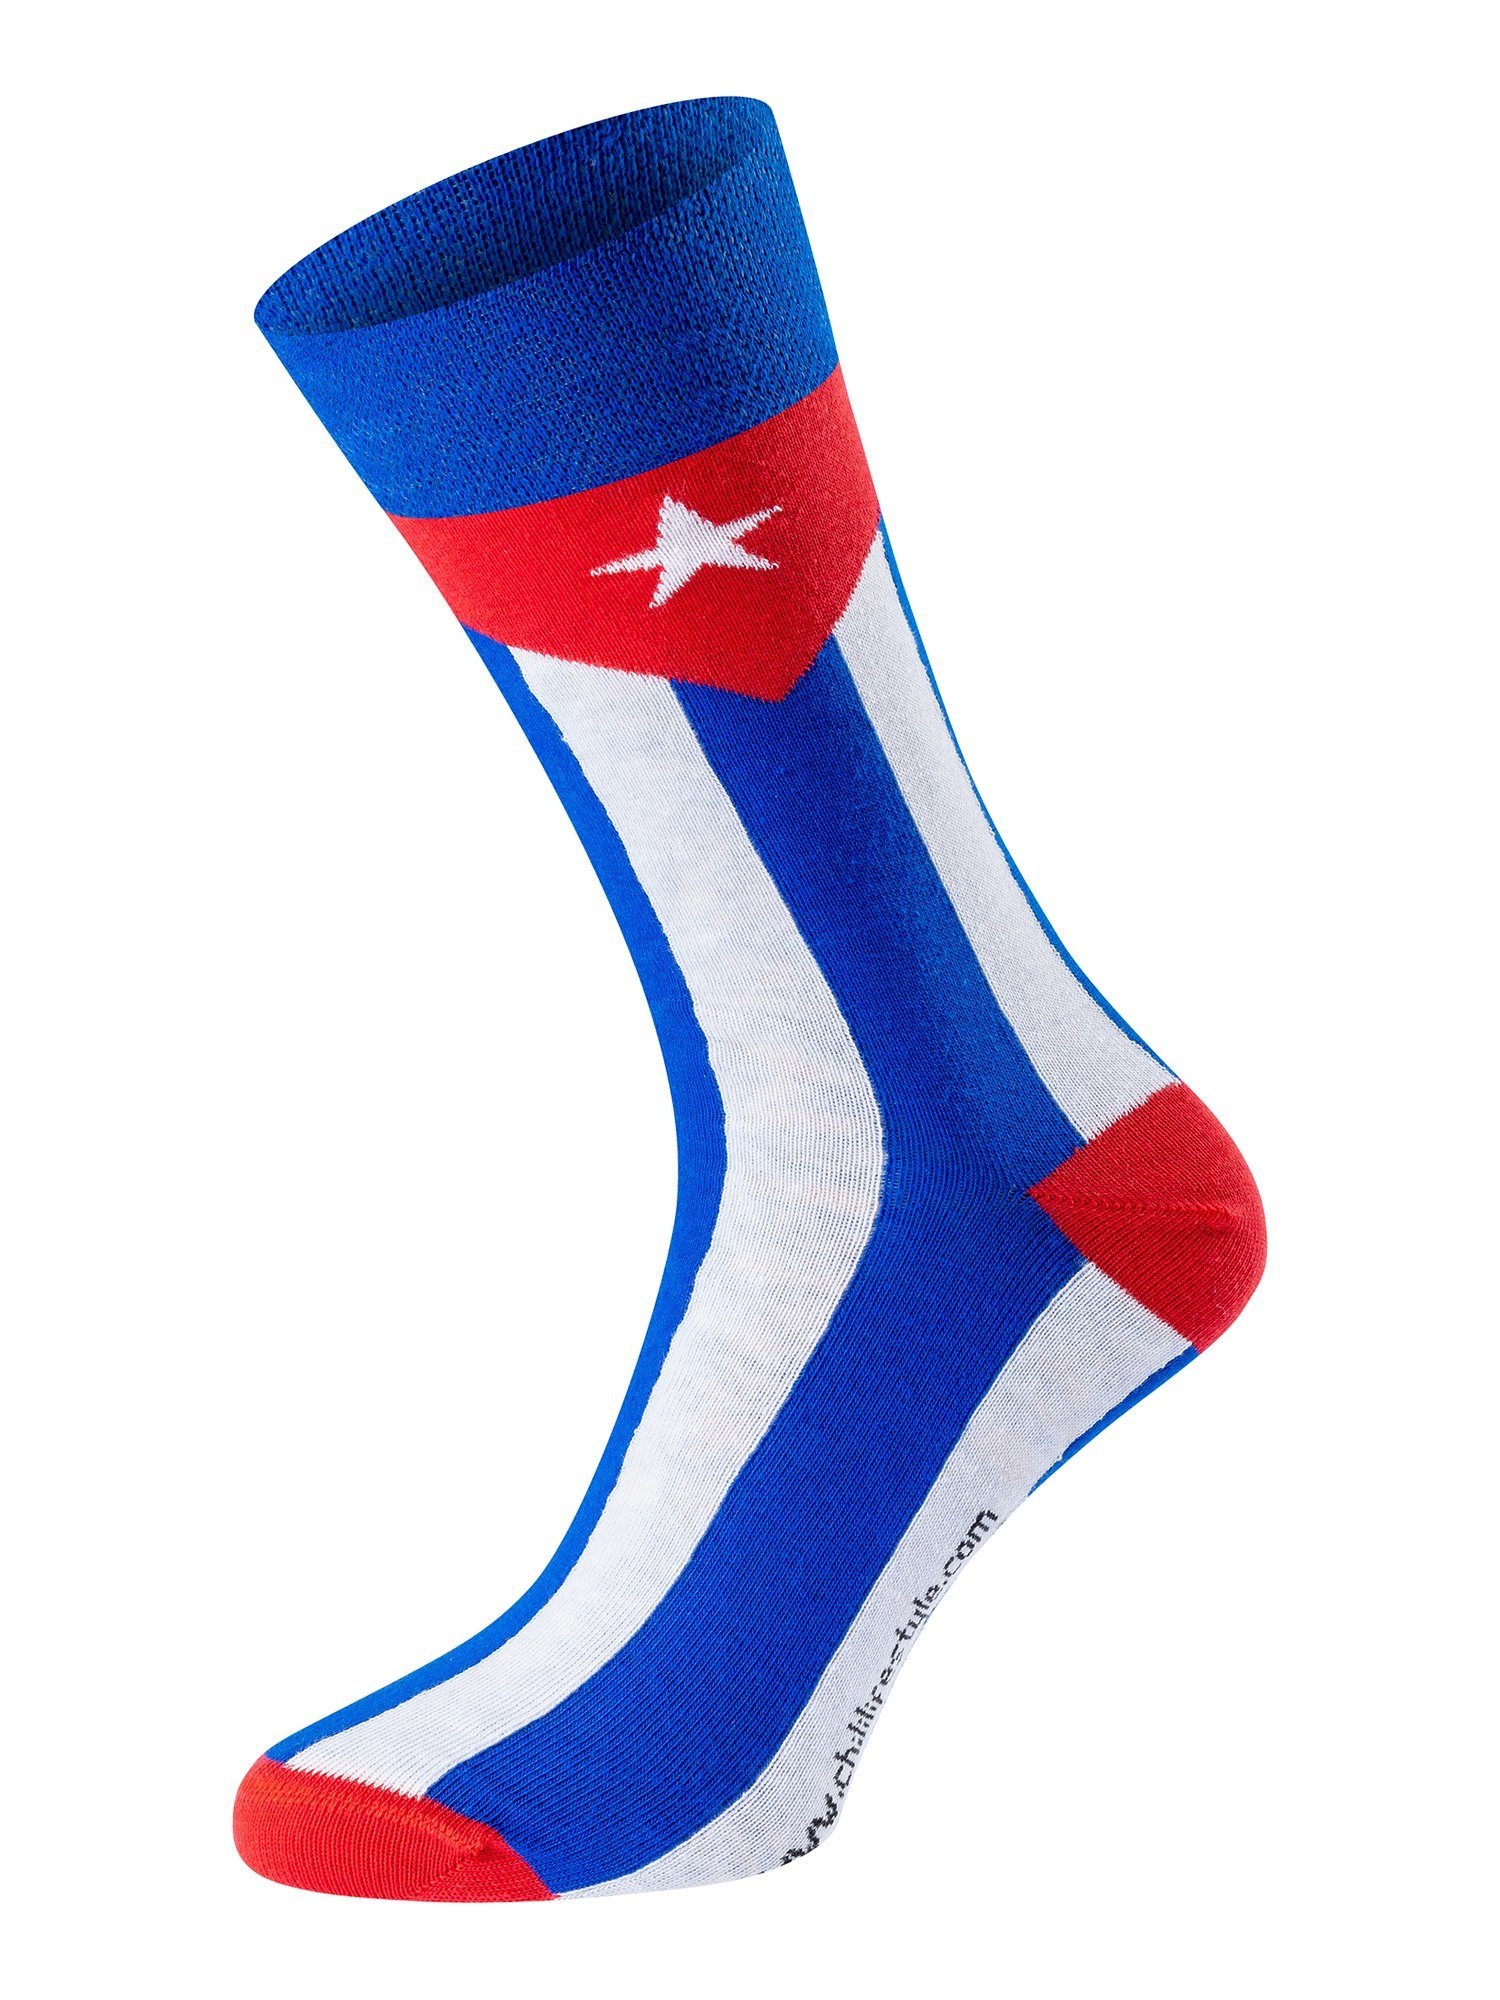 Chili Socks Freizeitsocken Fidel Banderole Lifestyle Leisure